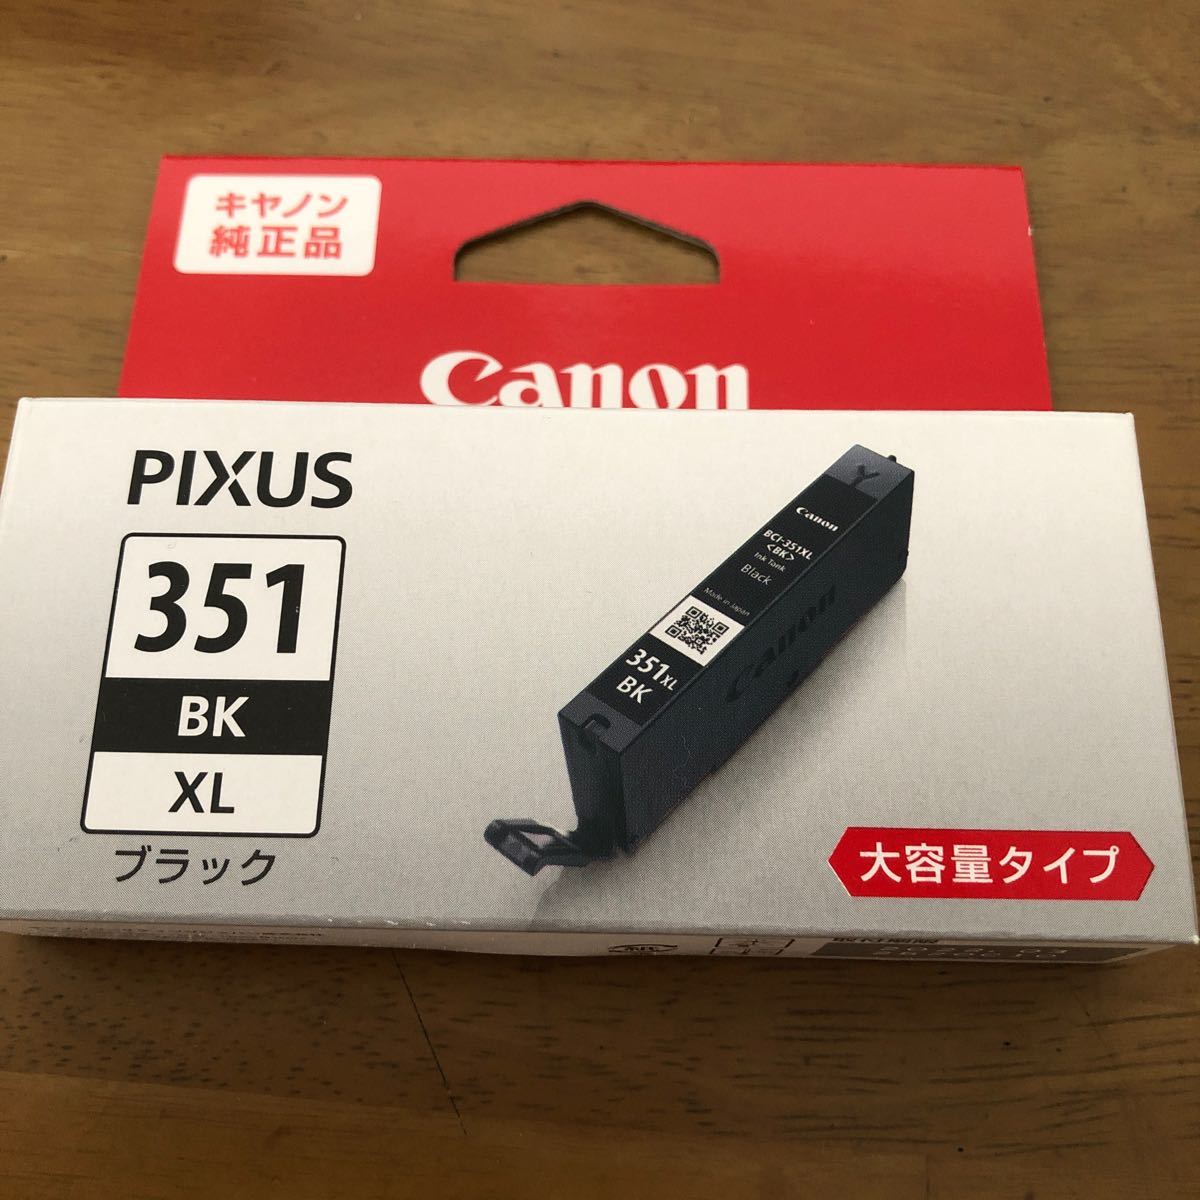 Canon PIXUS 351BK XL 大容量タイプ　ブラック